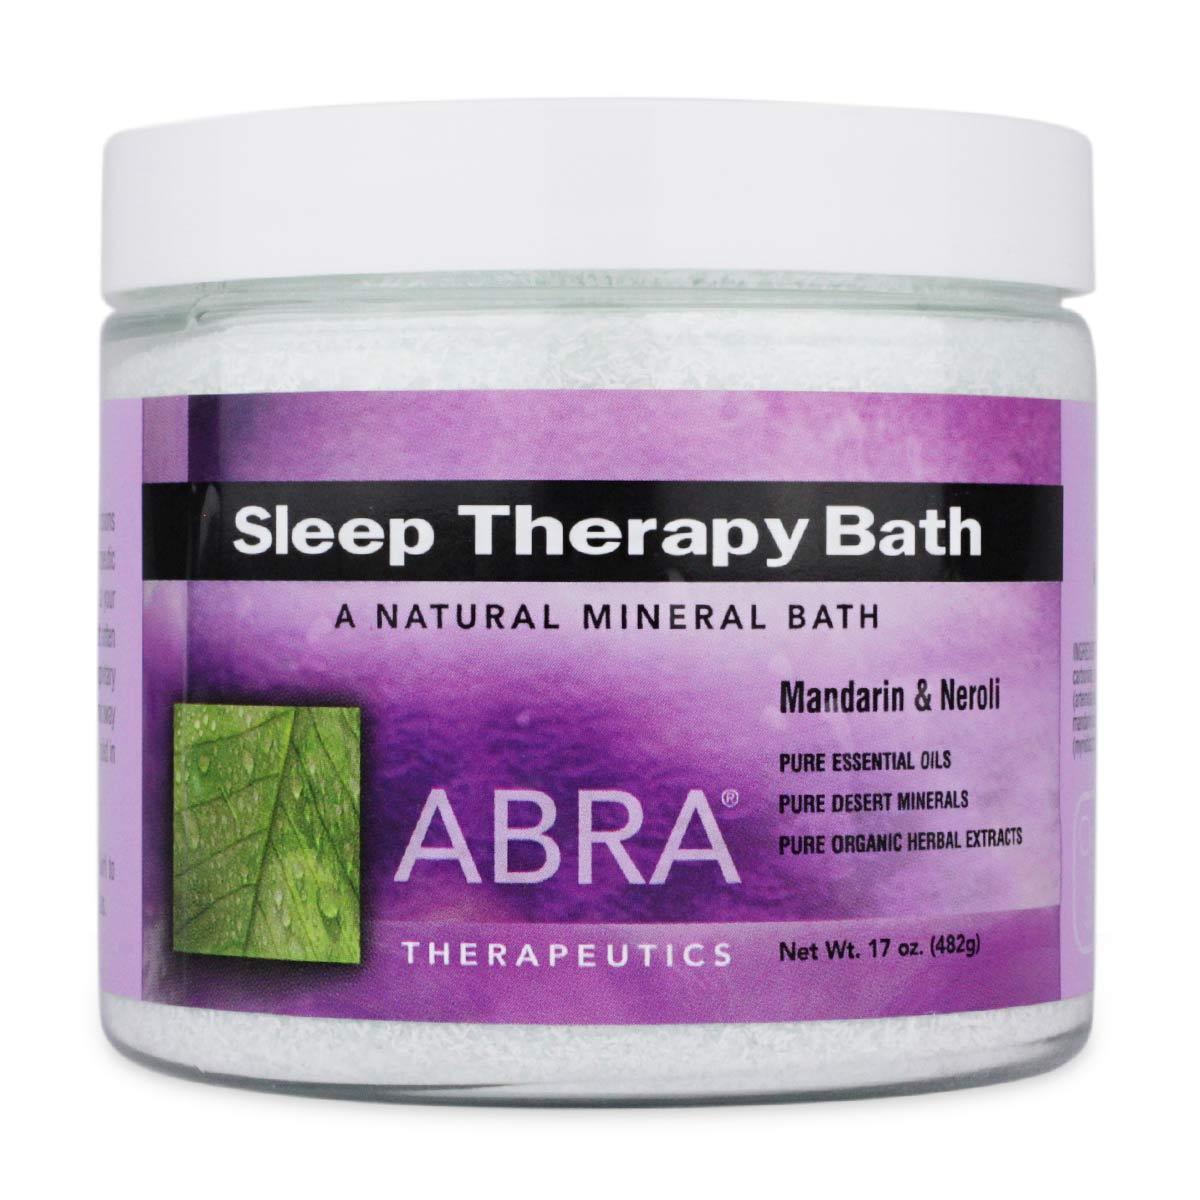 Primary image of Sleep Therapy Bath